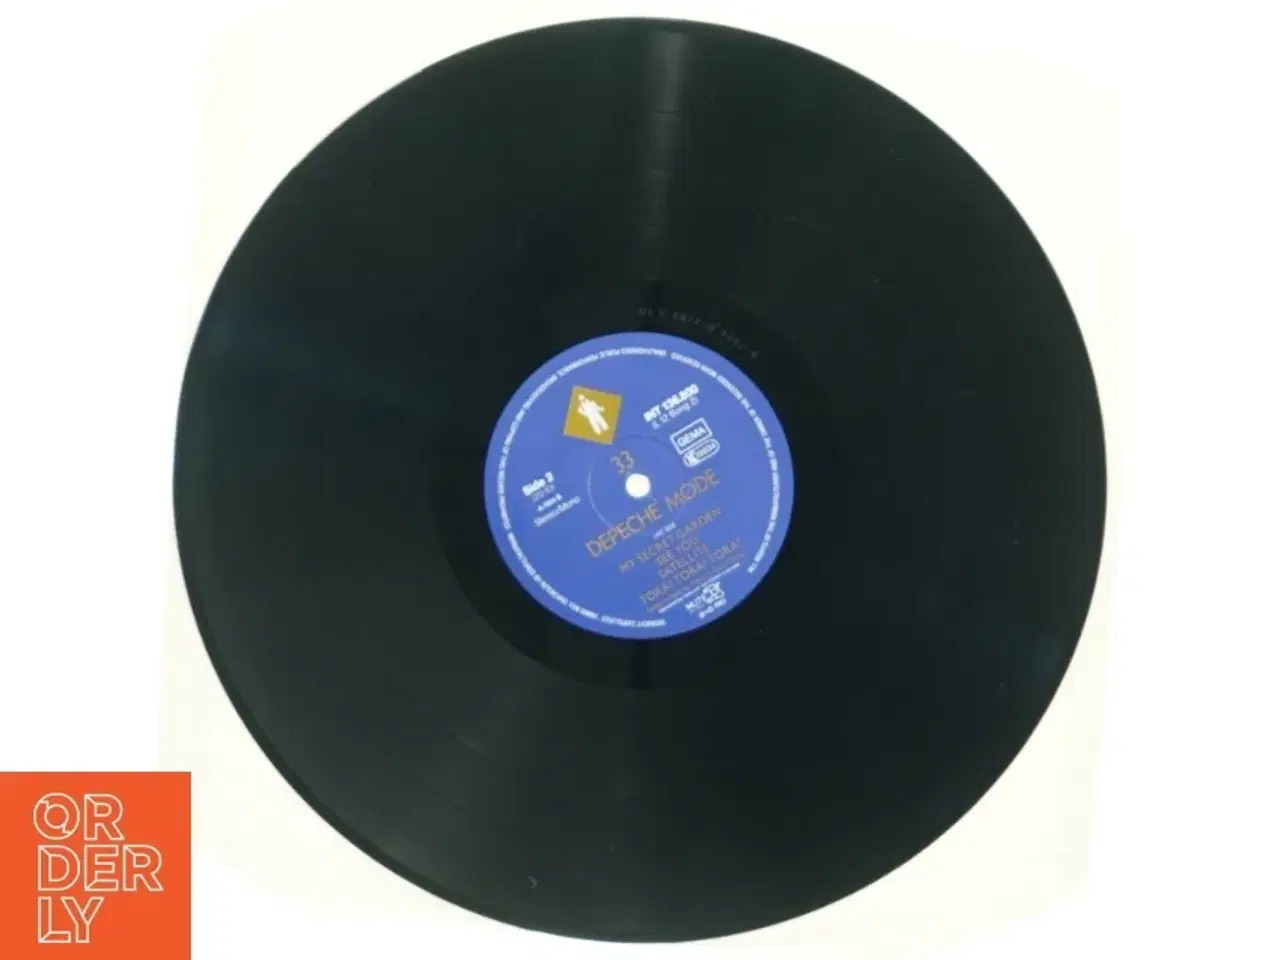 Billede 2 - Depeche mode: Get the balance right and live tracks (LP) fra Mute (str. 30 cm)